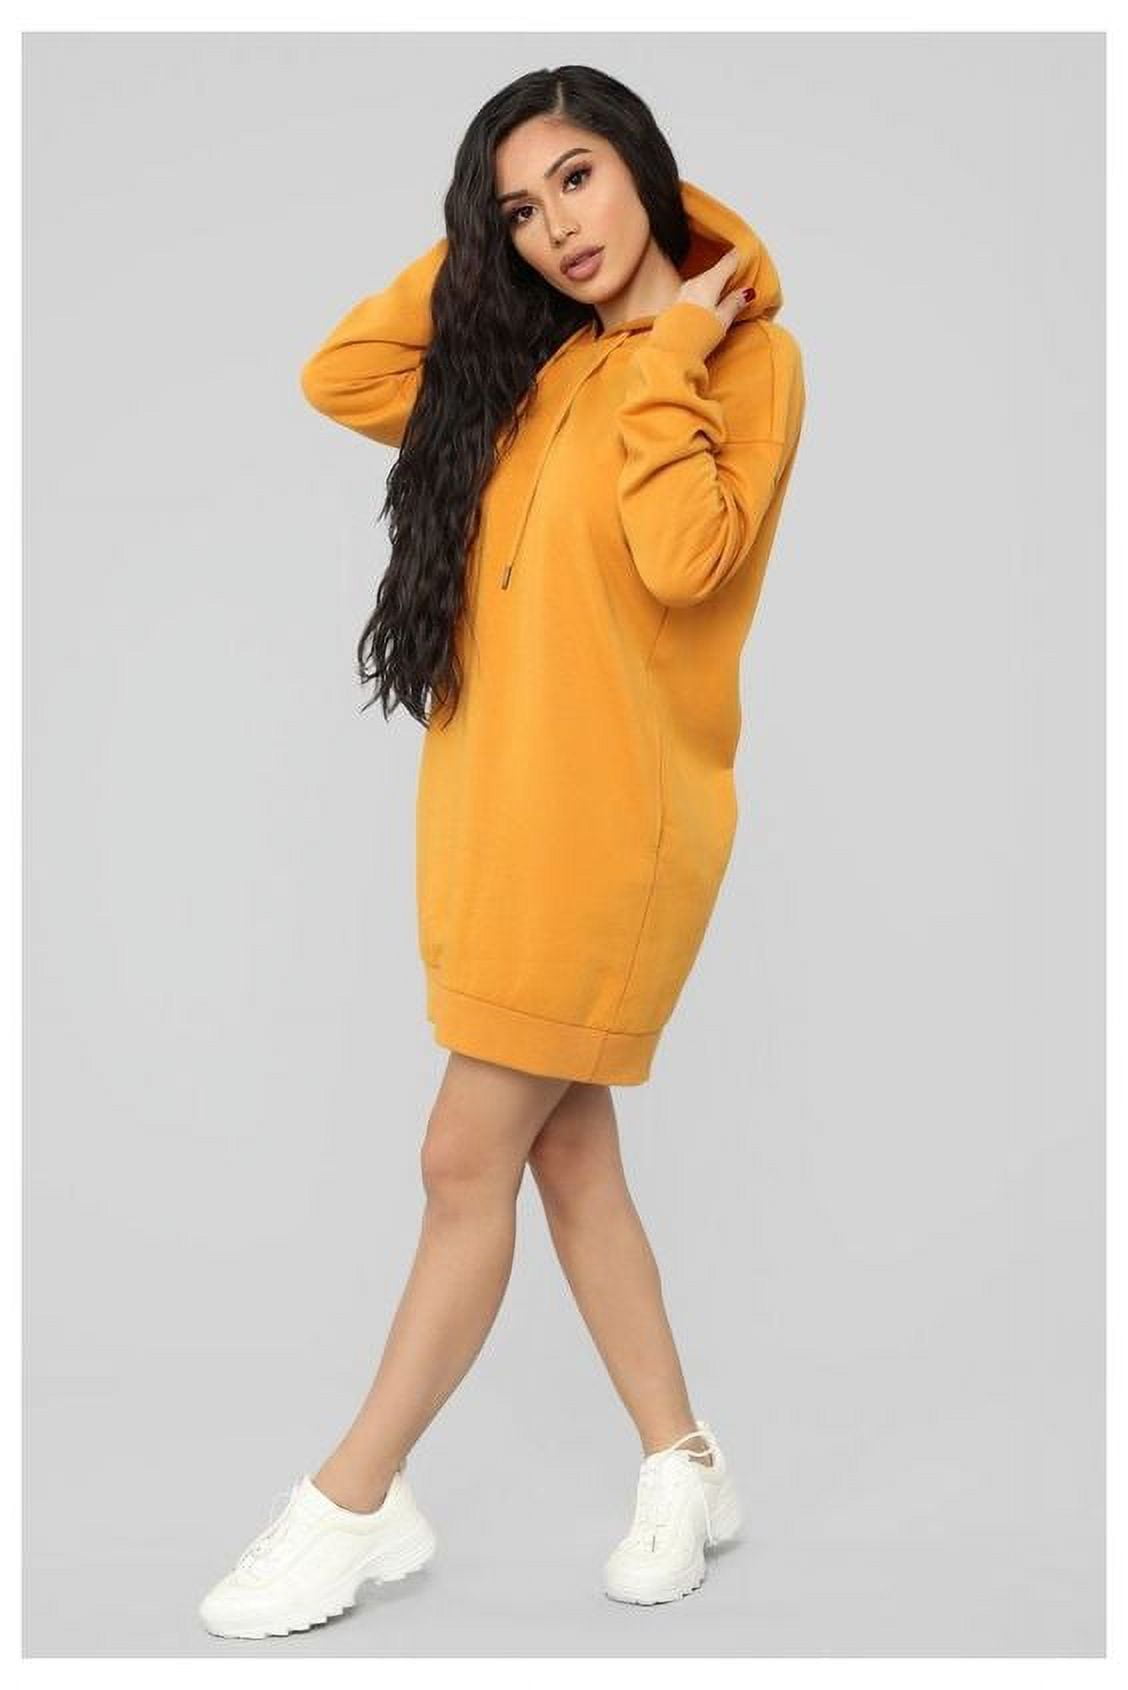 Calvin Klein Women's Hoodie Long Sleeve Dress, Mustard, Large